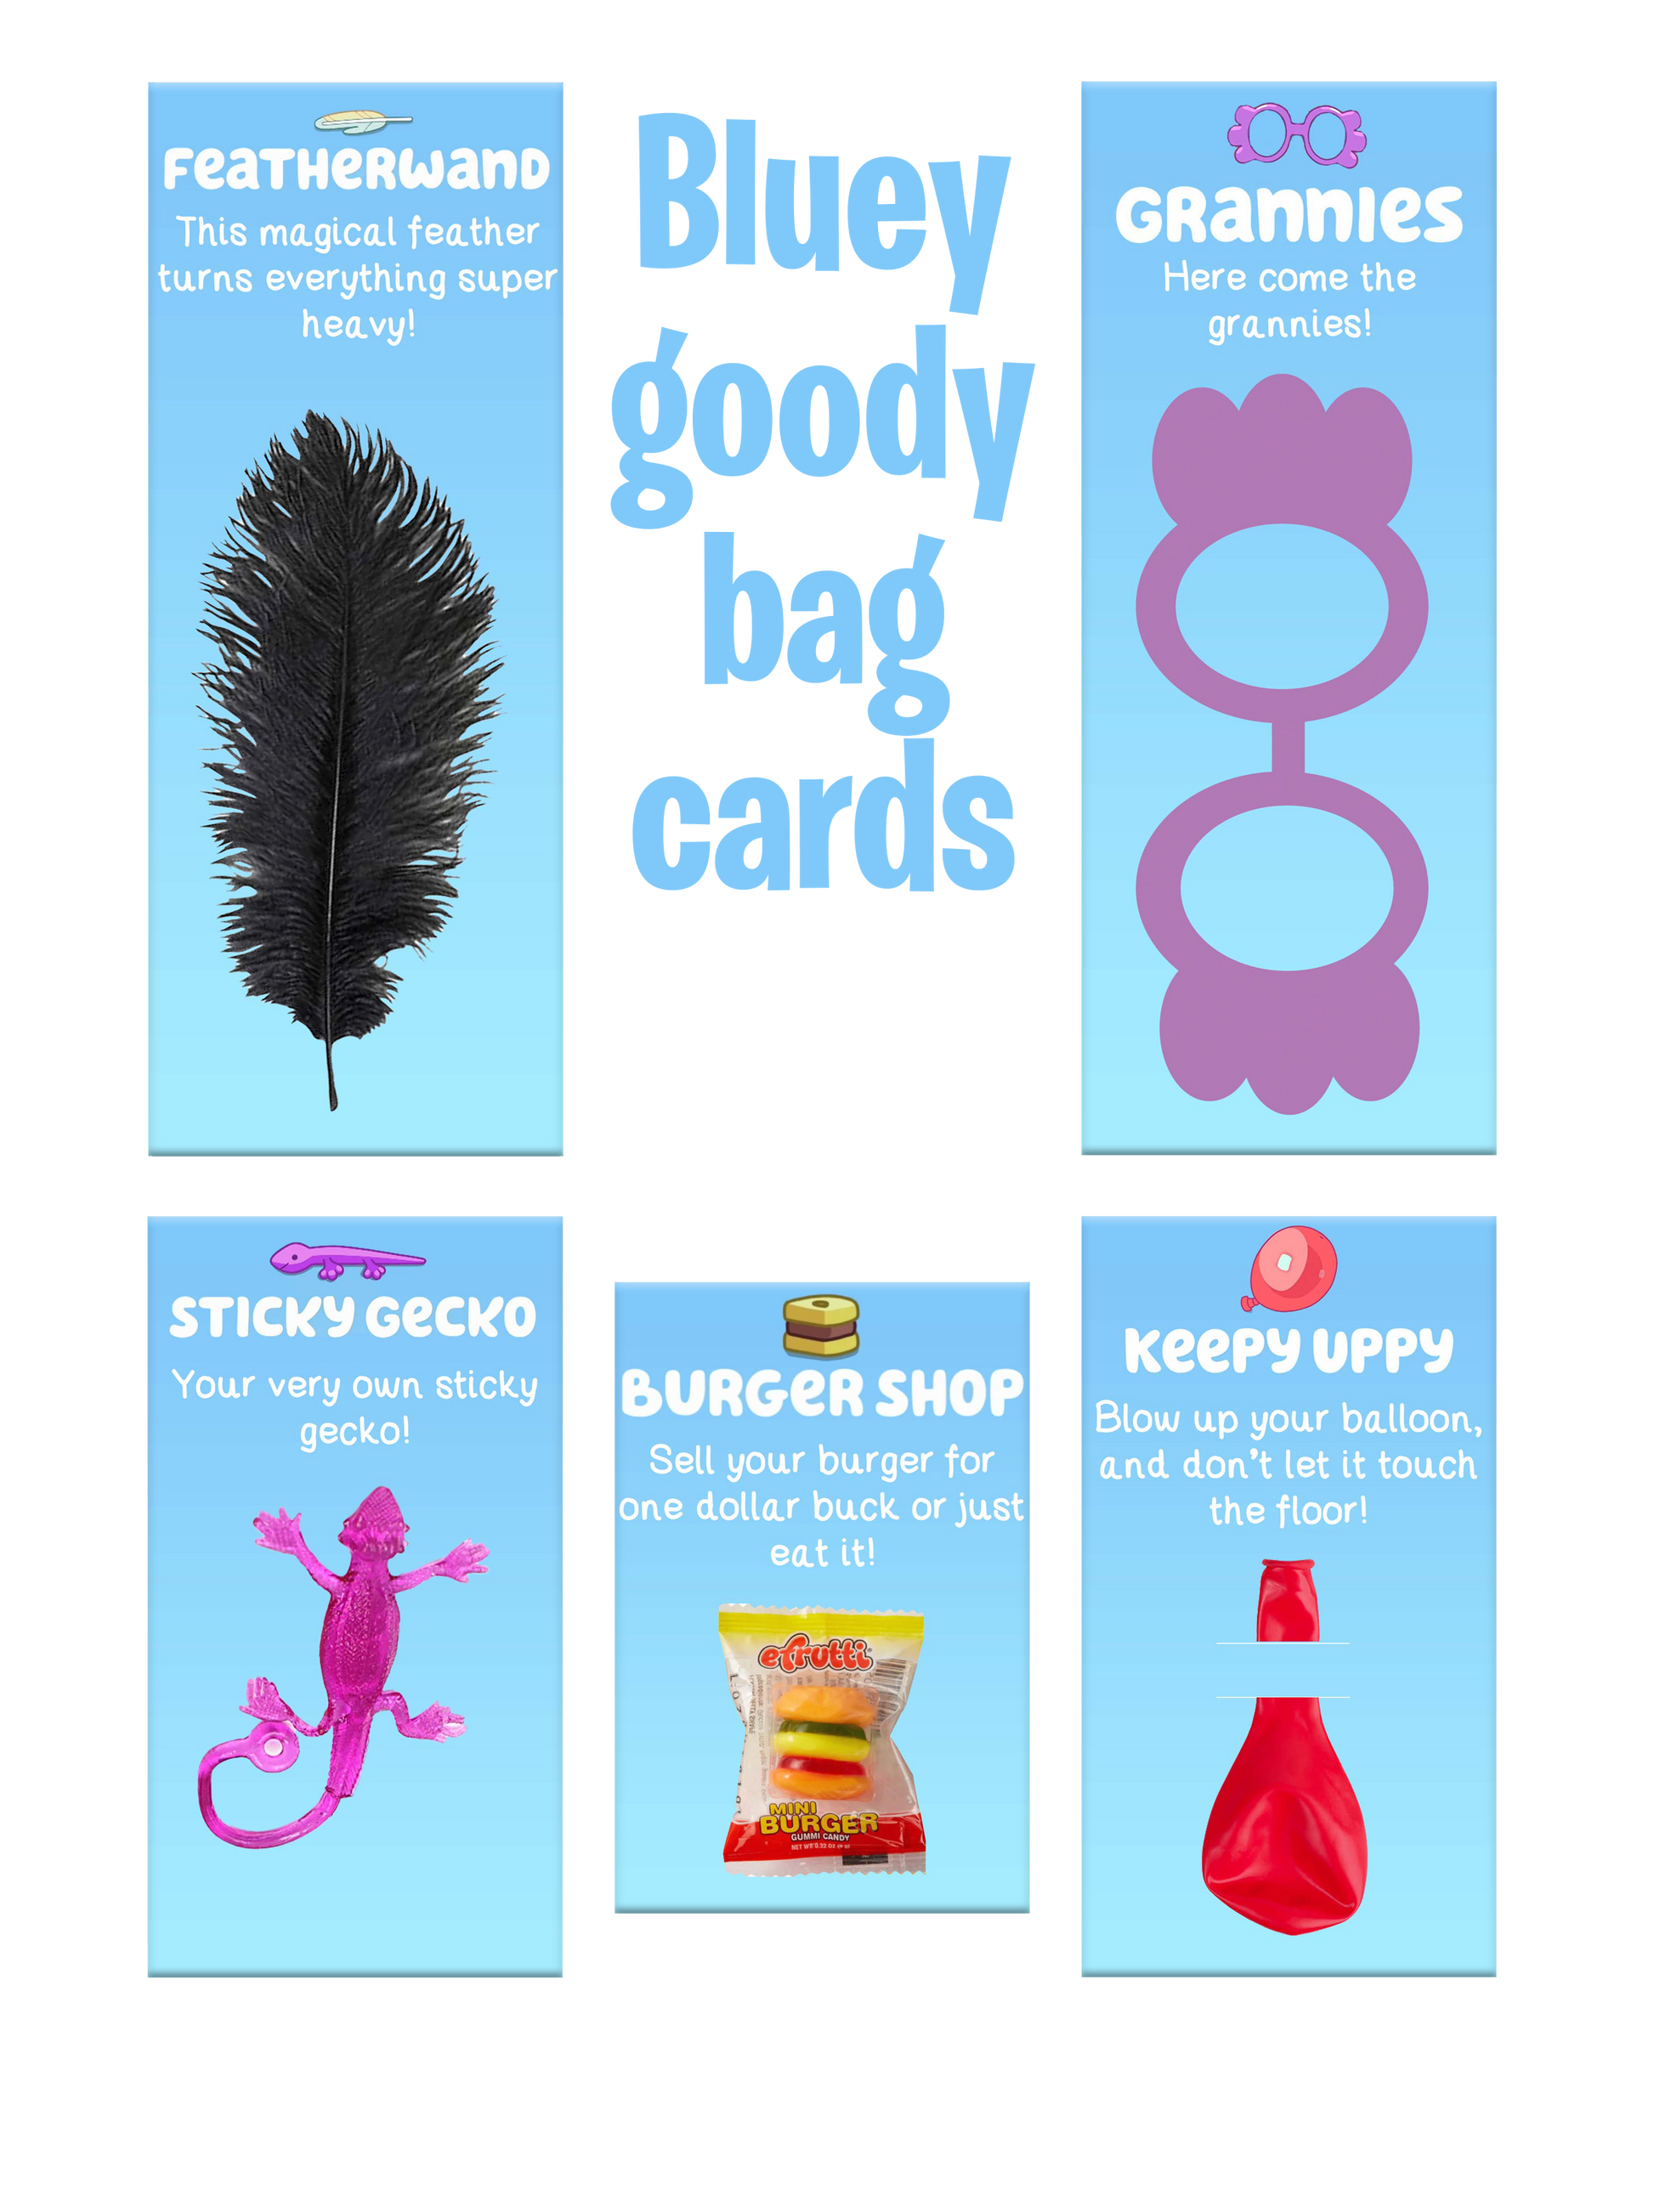 Bluey goody bag cards